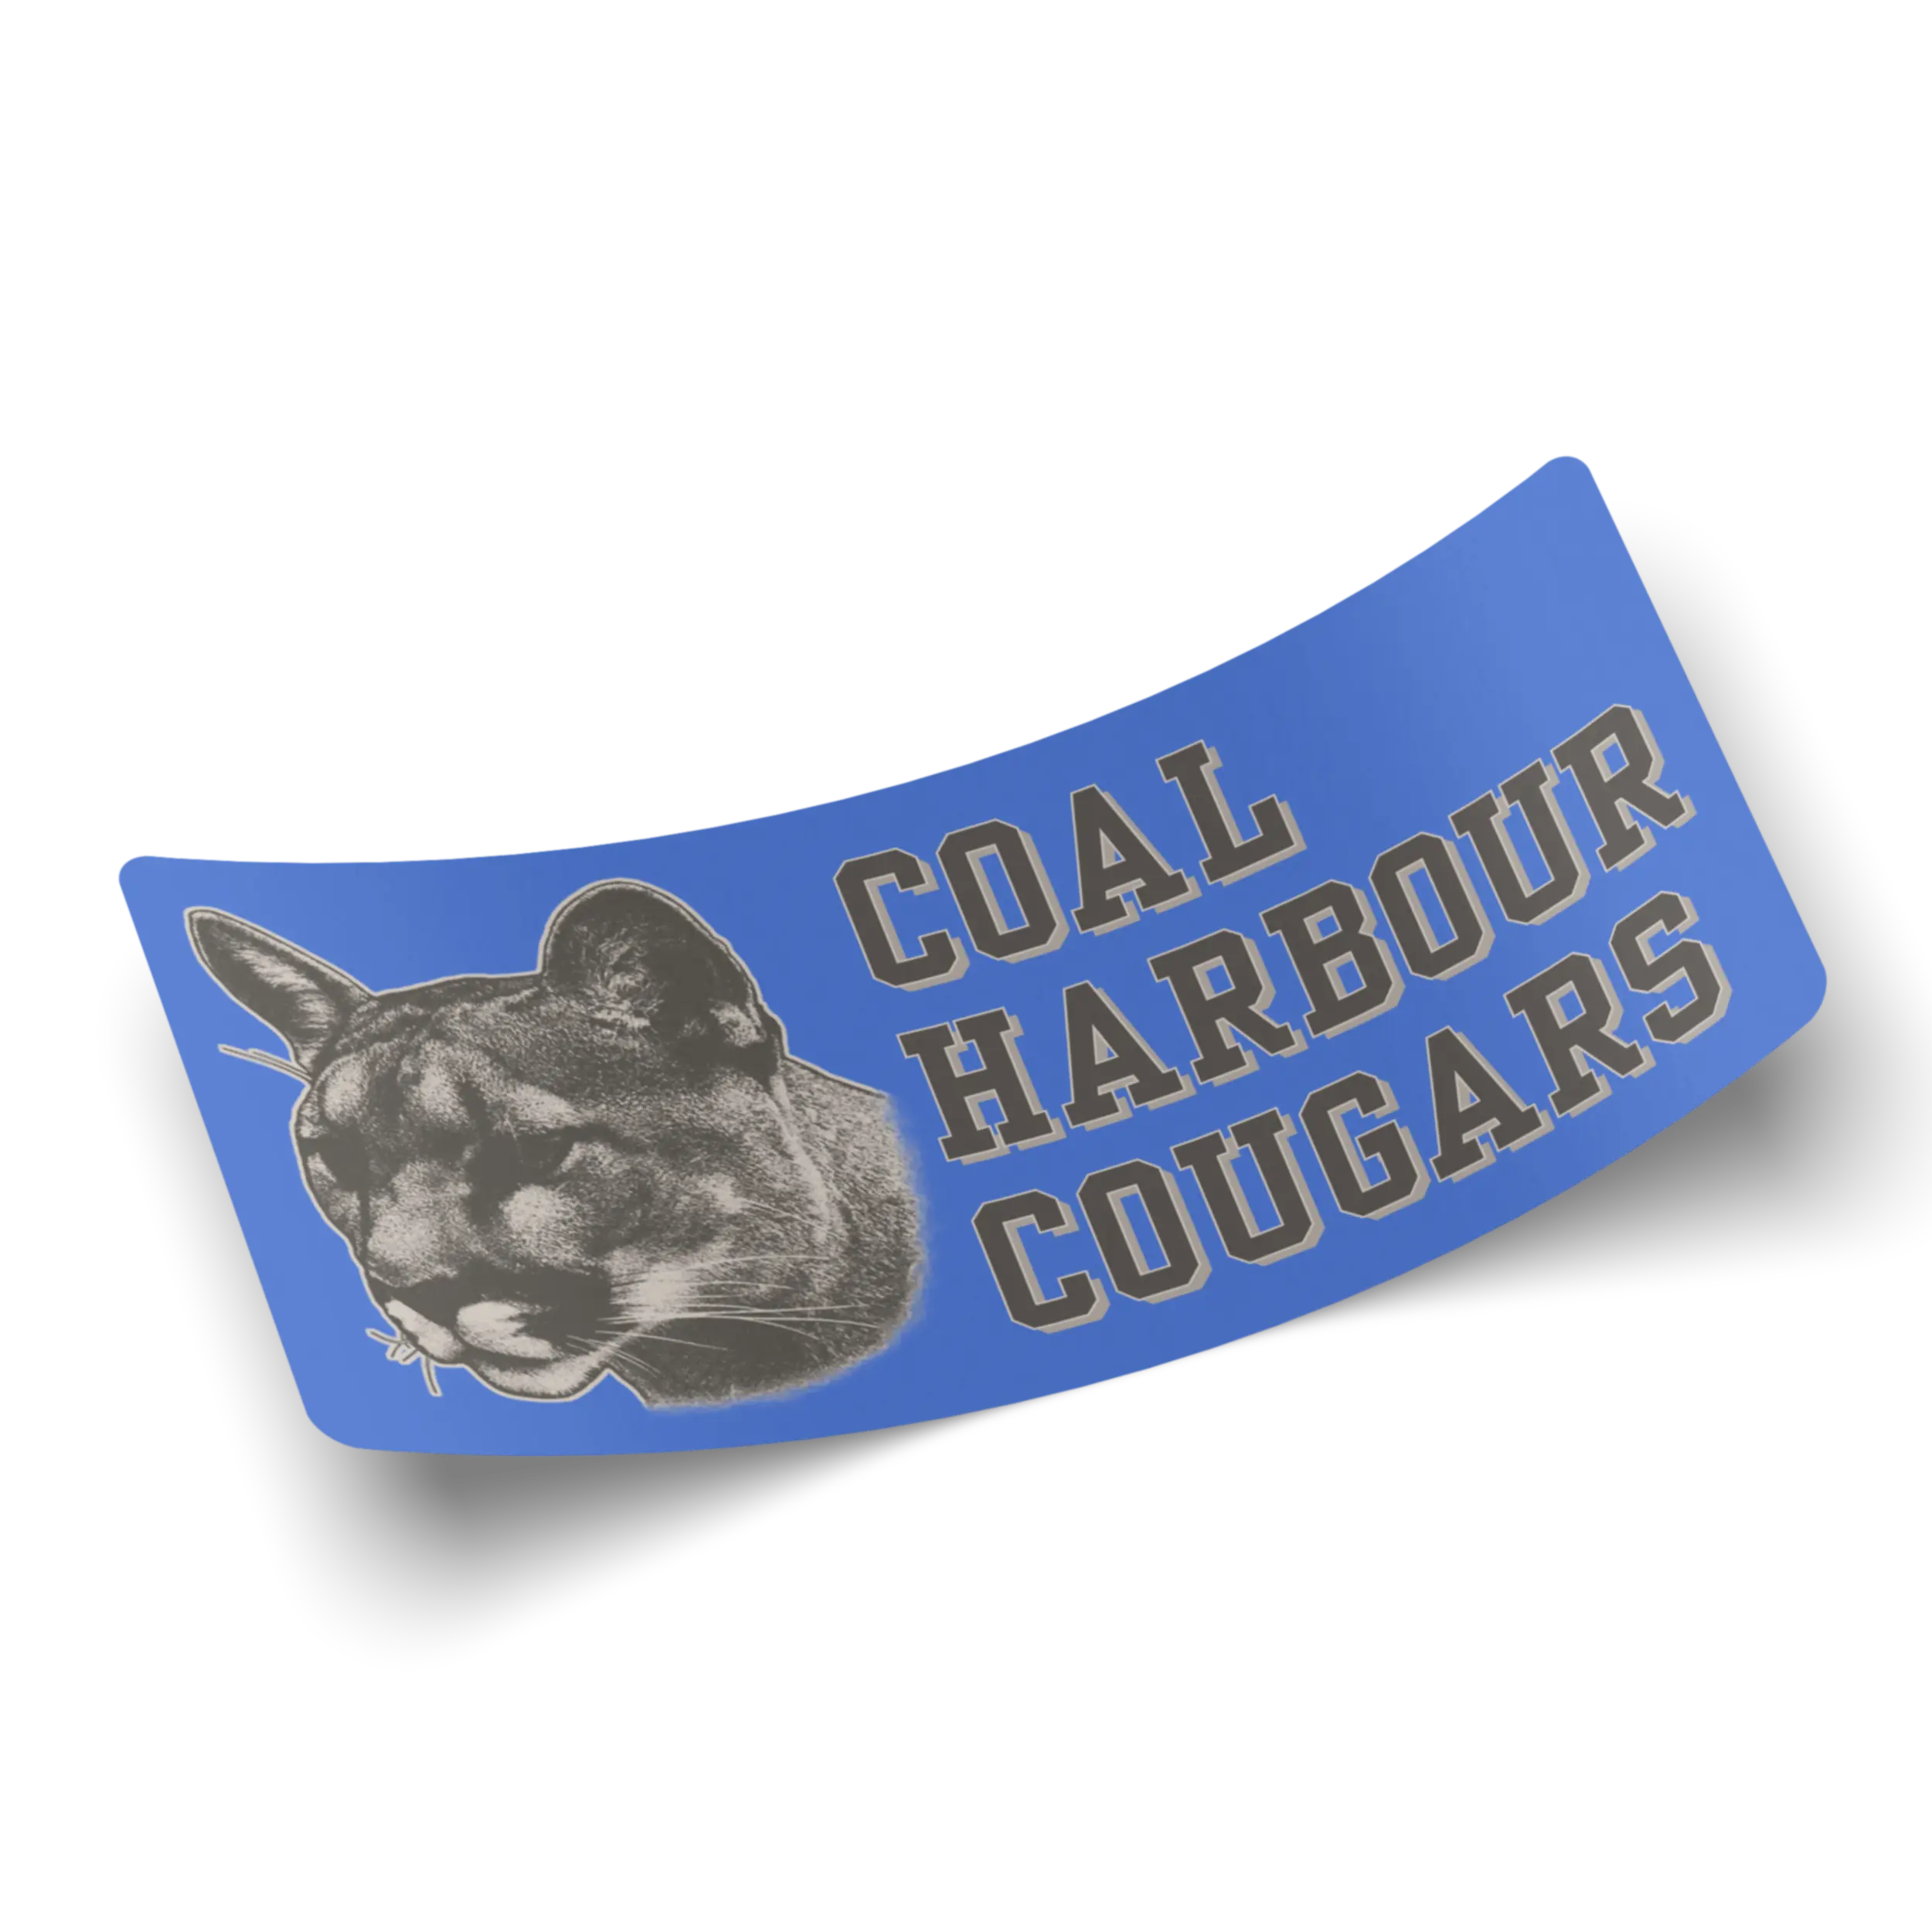 Coal Harbour Cougars Rectangular Sticker (3 Pack)